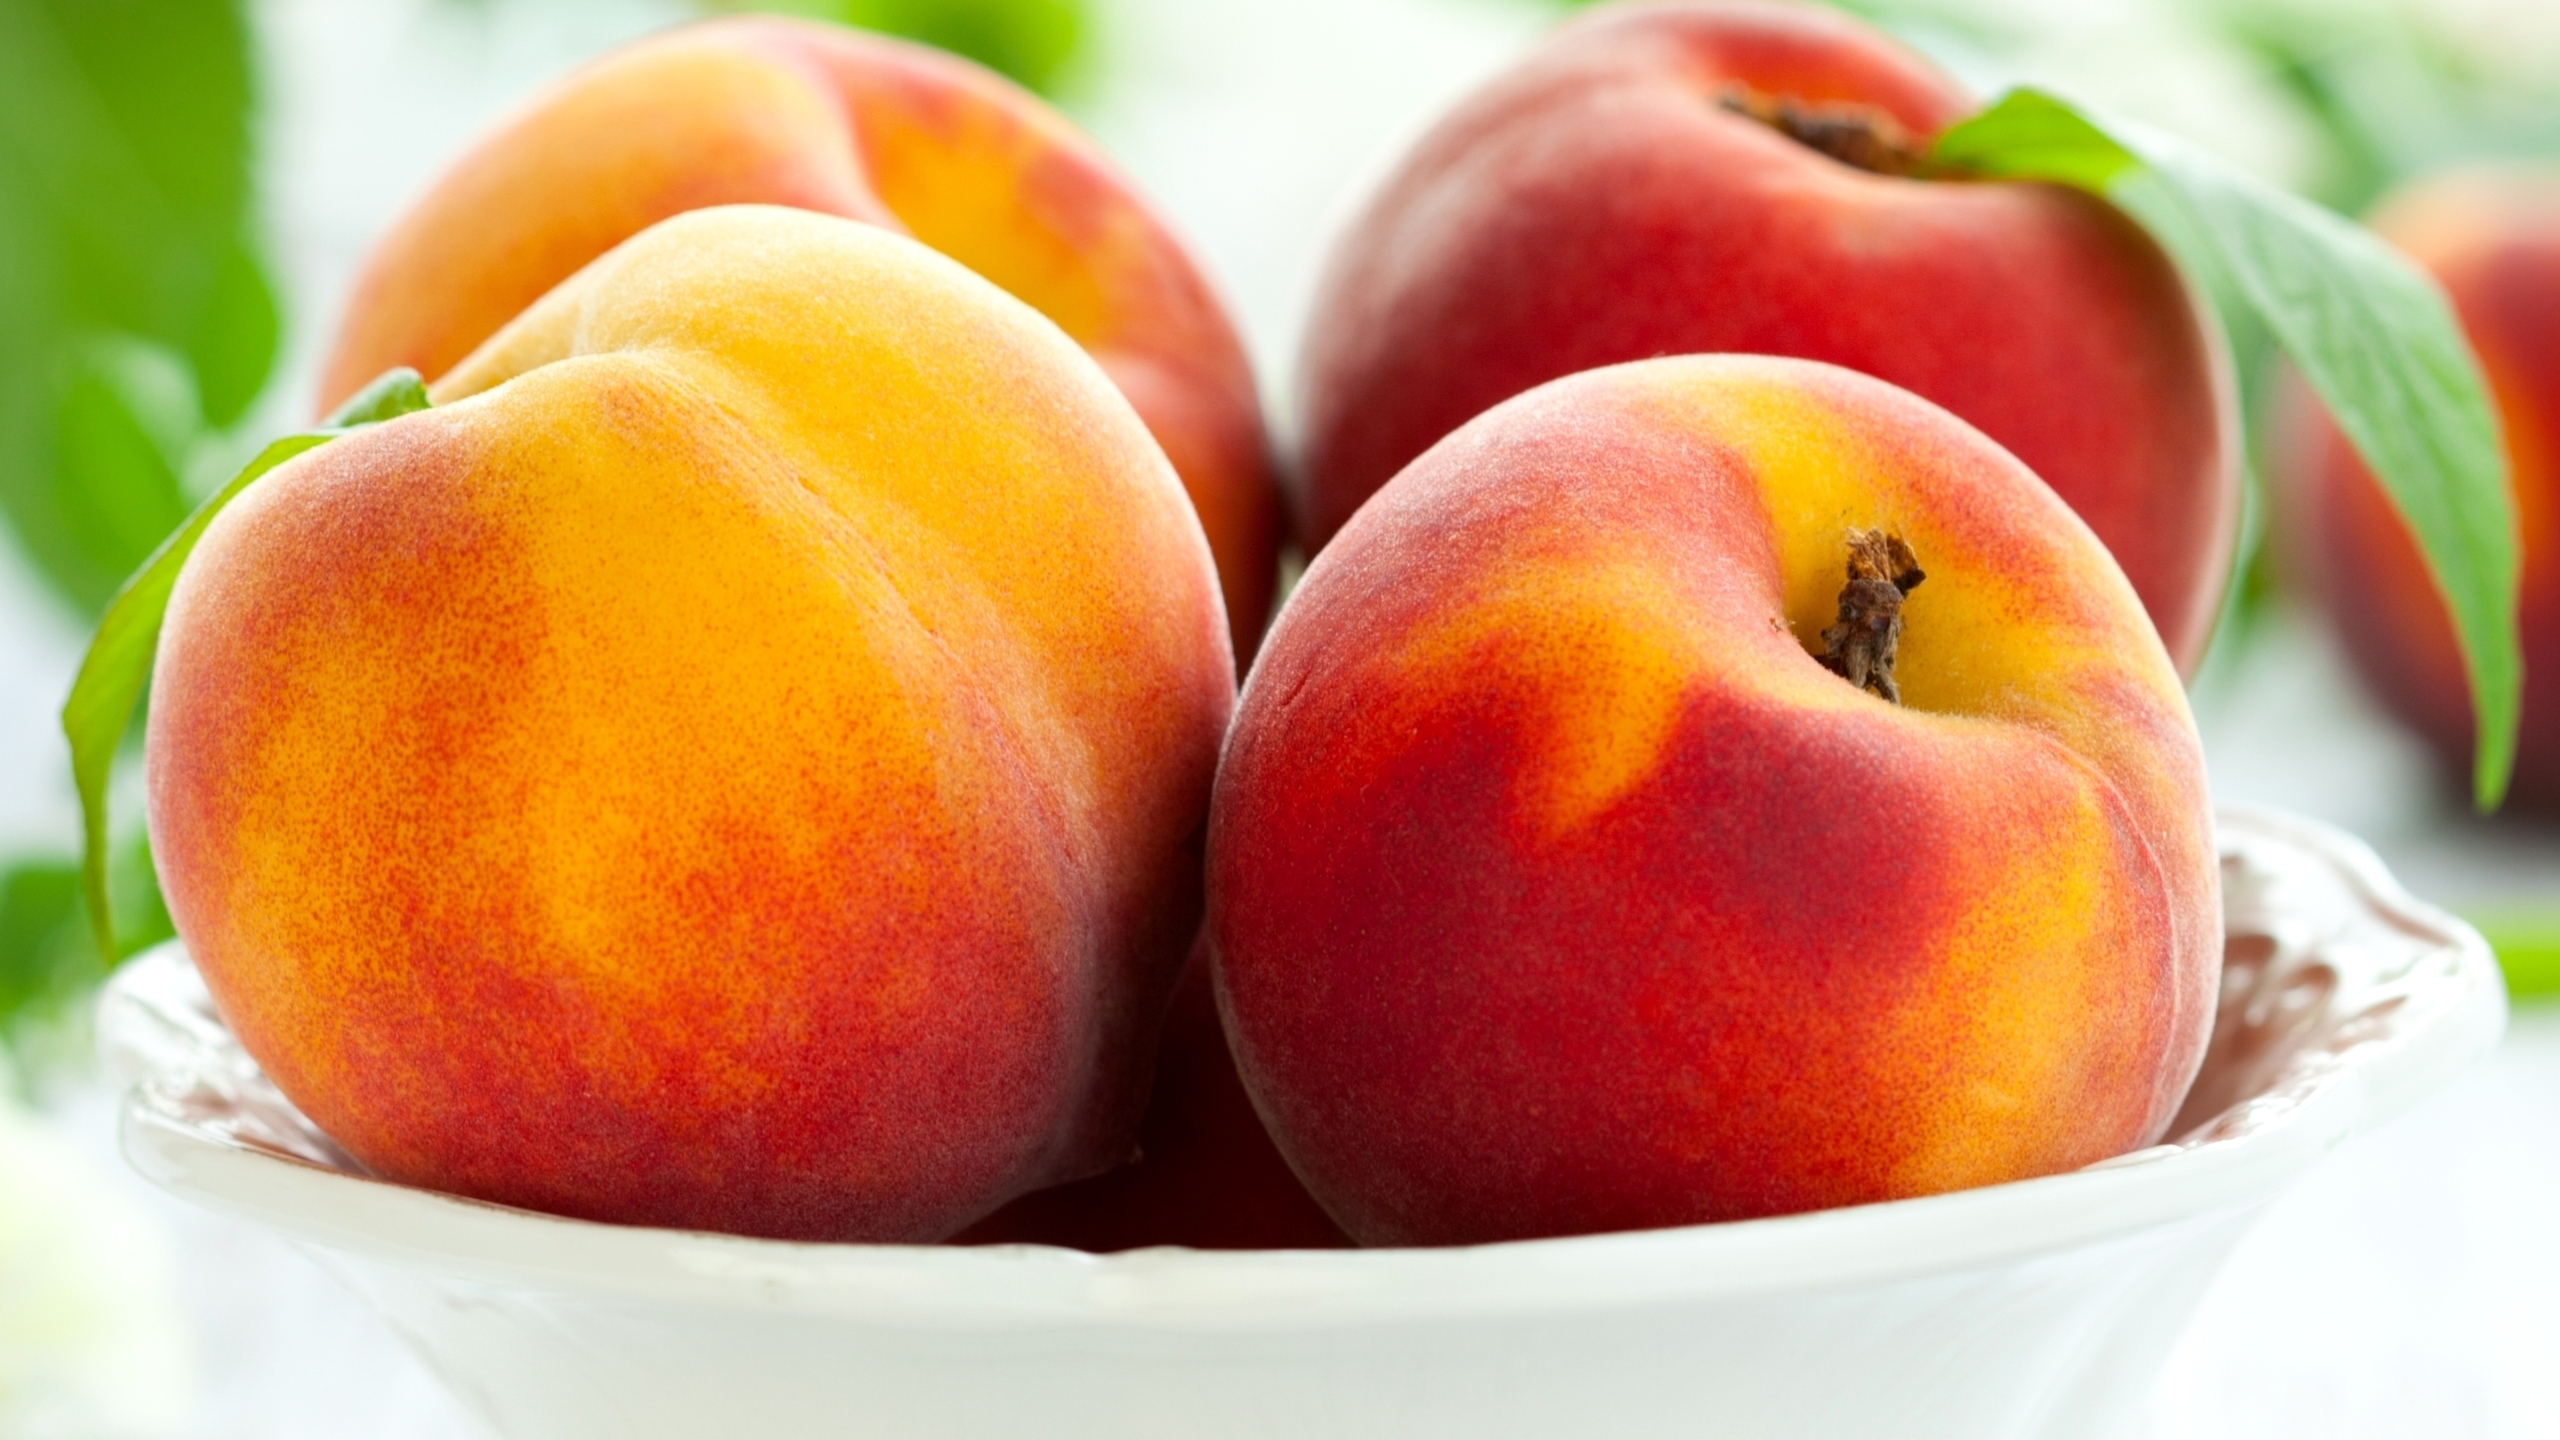 Peaches Fruit for 2560x1440 HDTV resolution